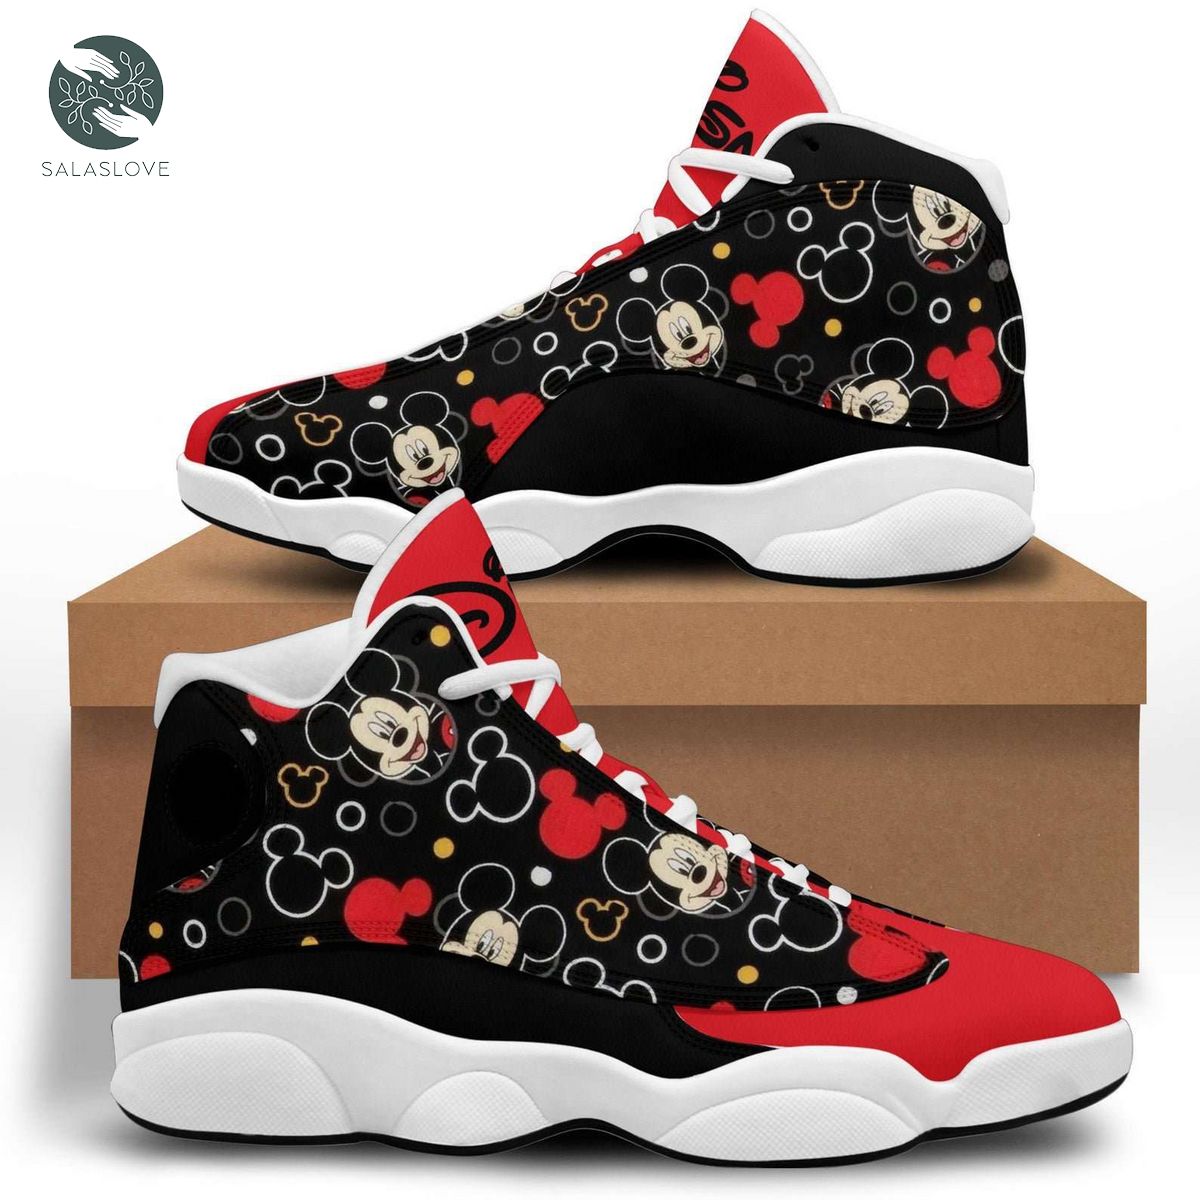 Mickey Mouse Air Jordan 13 Shoes